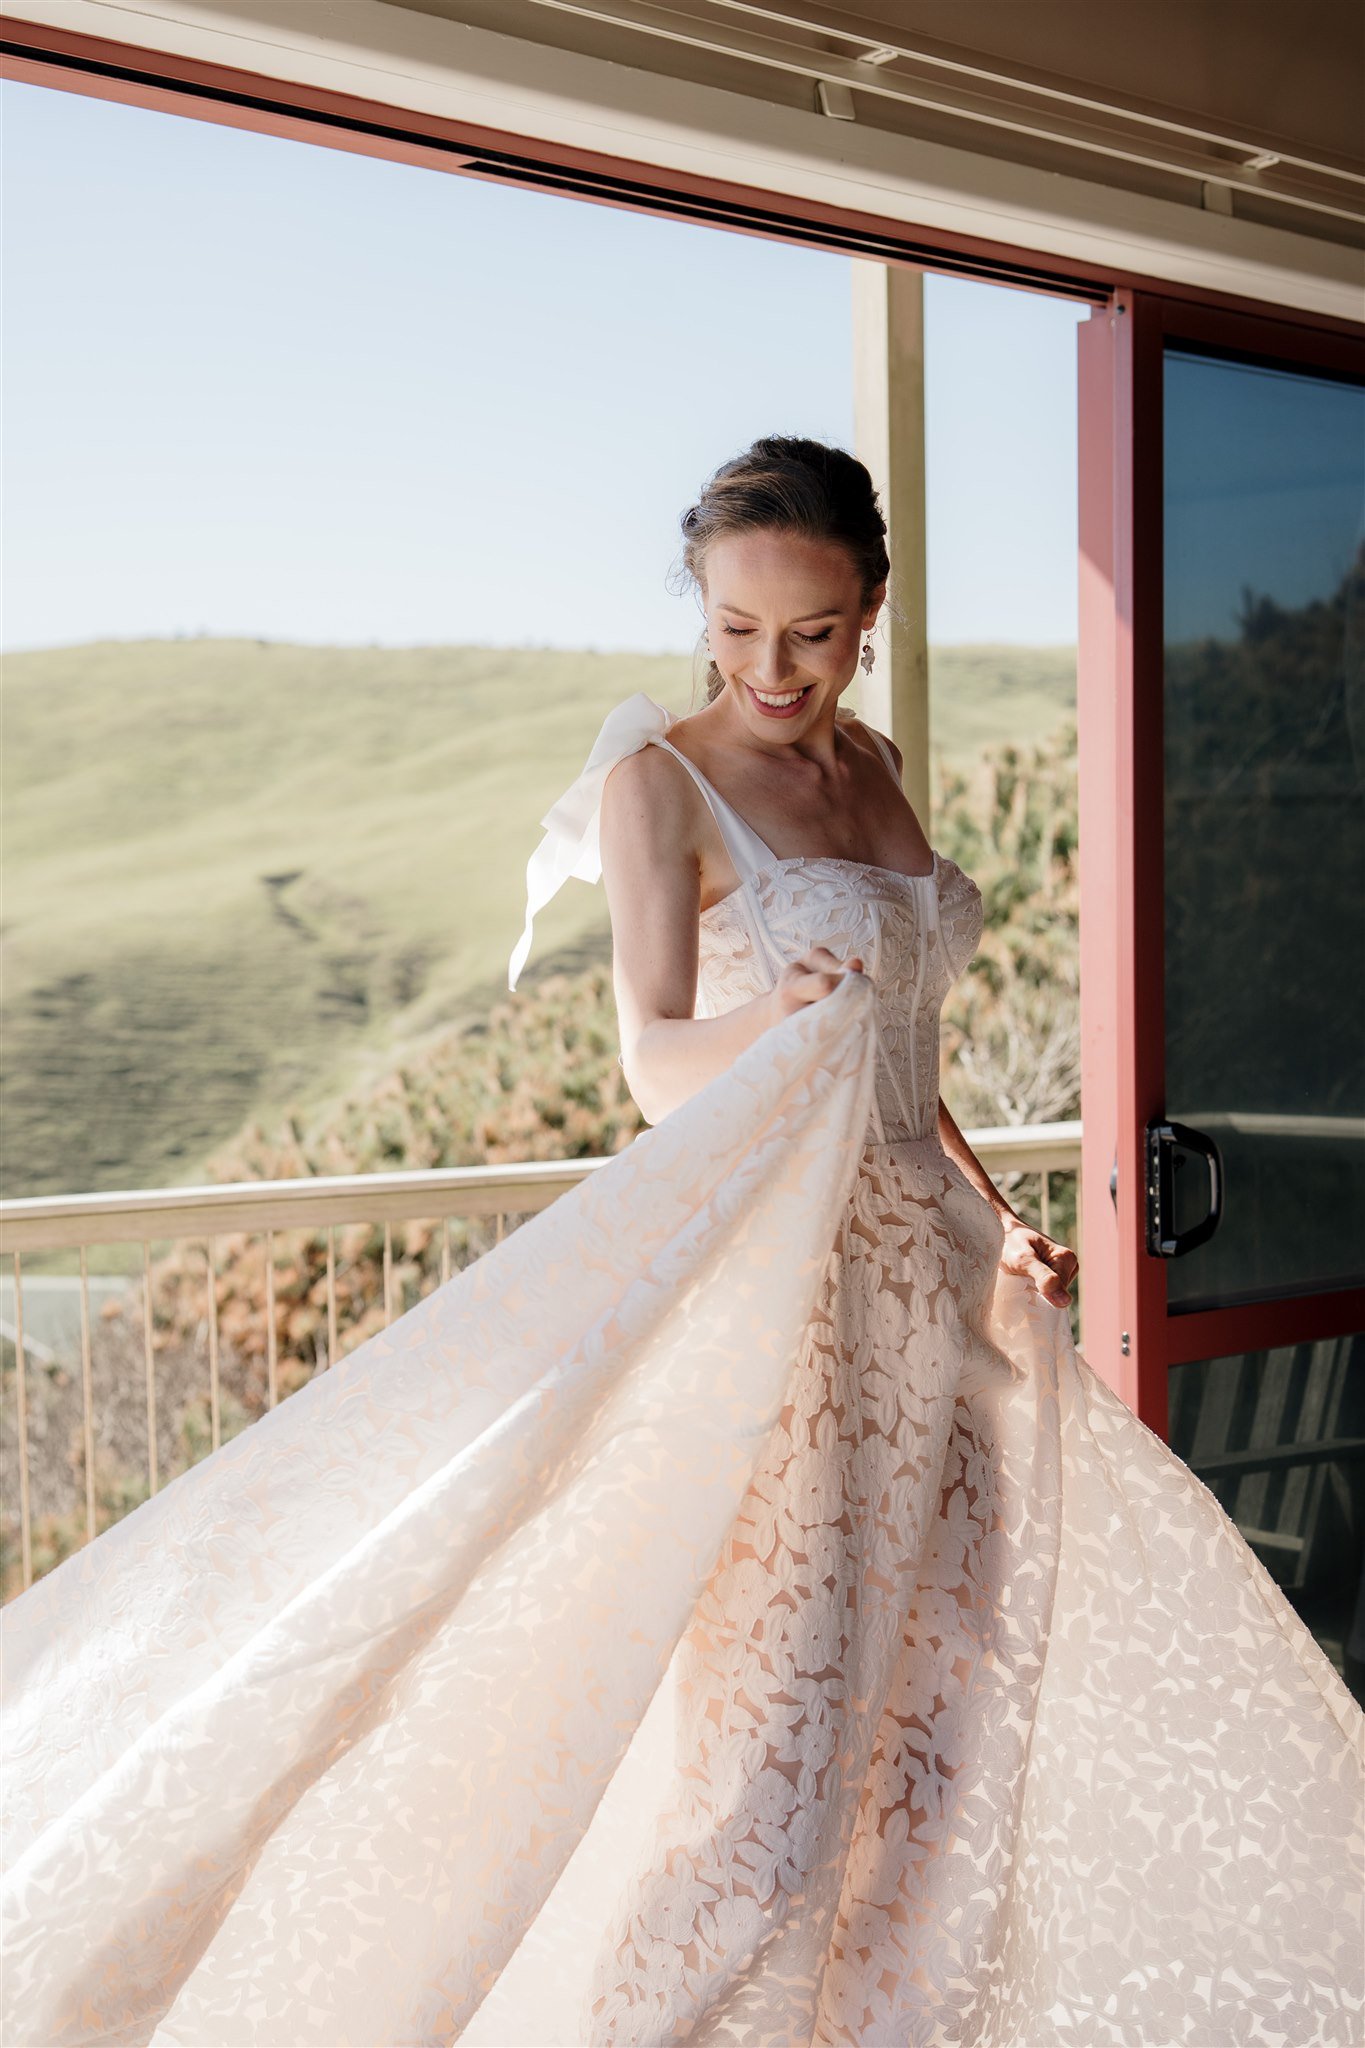 castaways-NZ-new-zealand-auckland-wedding-photographer-photography-videography-film-dear-white-productions-best-venue-waiuku-engagement-elopement-style-beach-intimate-miss-chloe-gown-dress (3).jpg